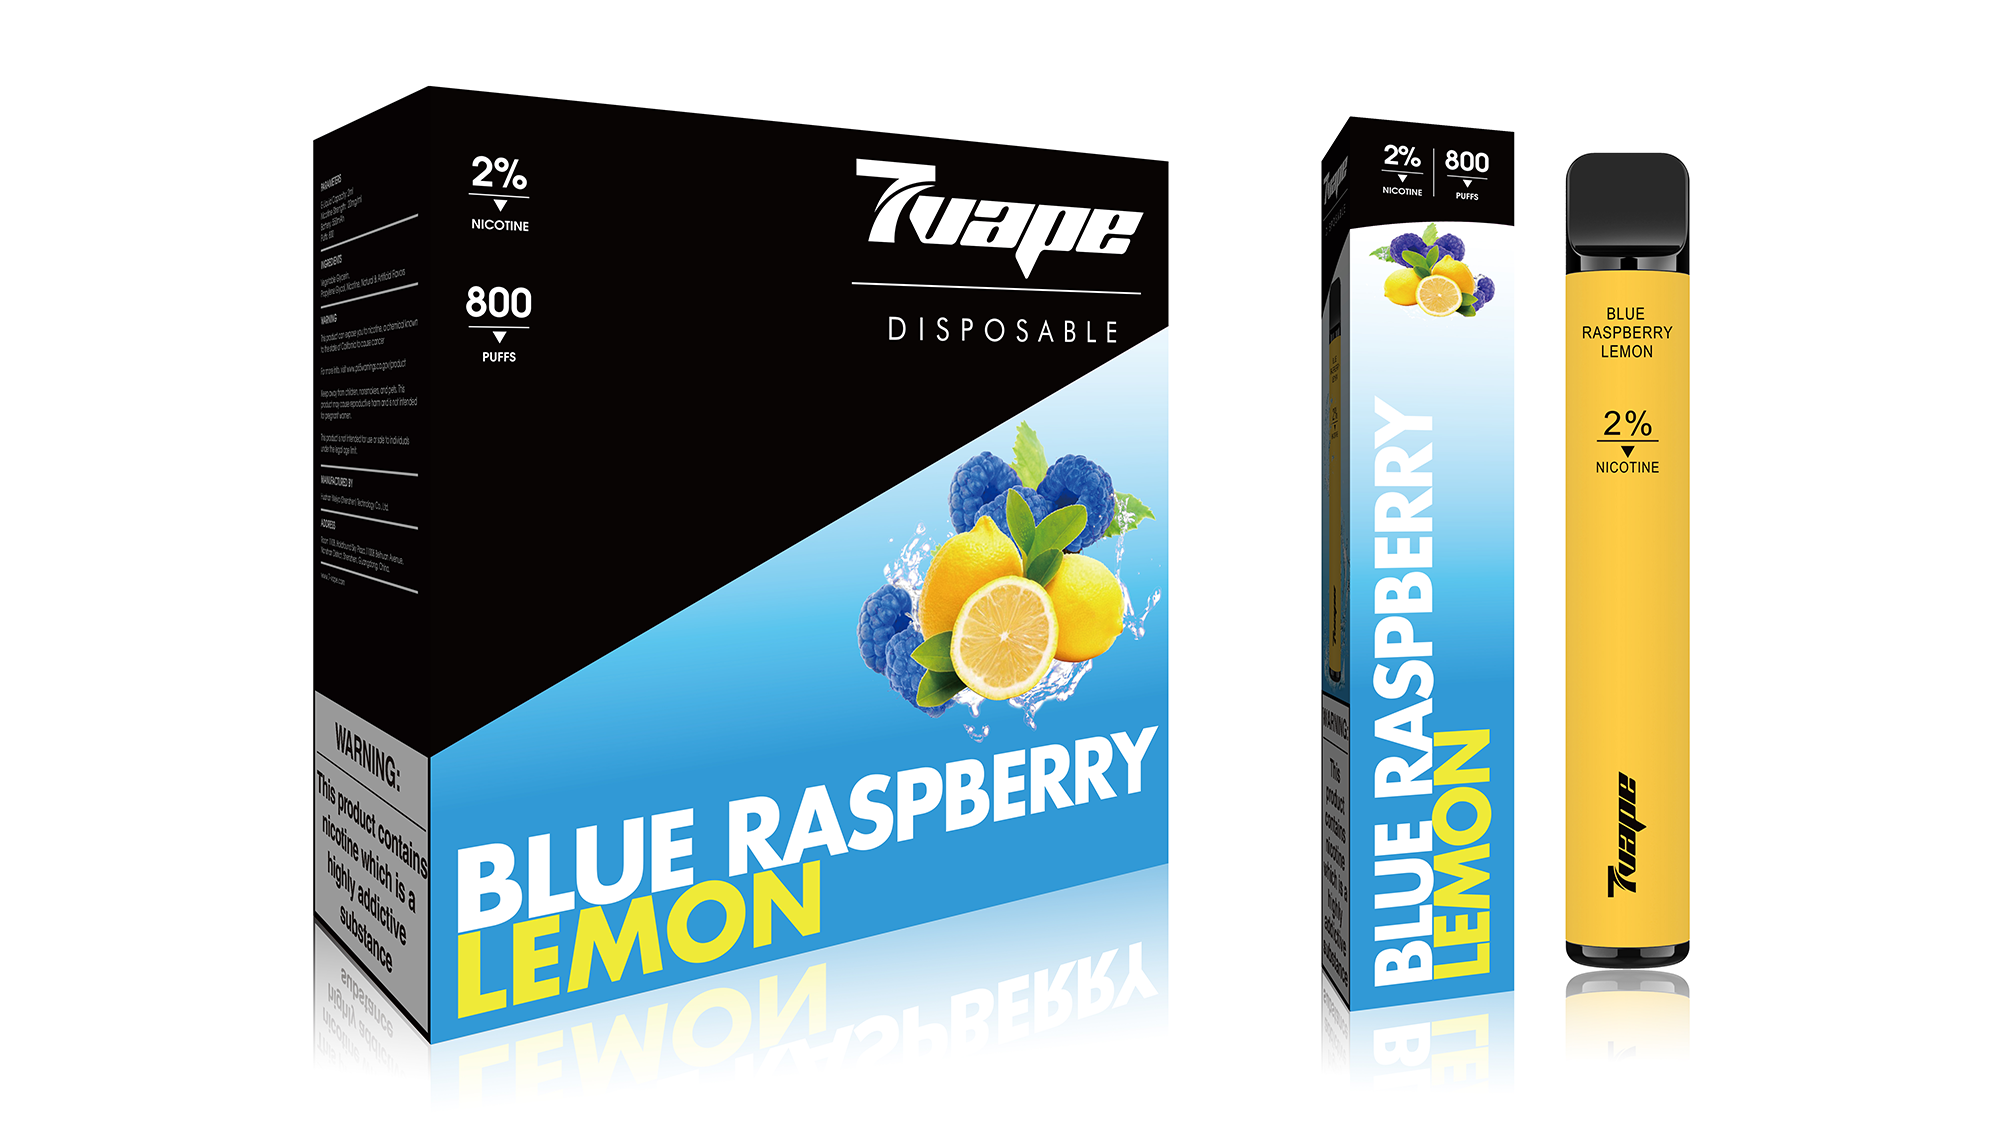 7VAPE disposable vape, blue raspberry vape, 800 puffs, 2% nicotine, 7-VAPE BAR